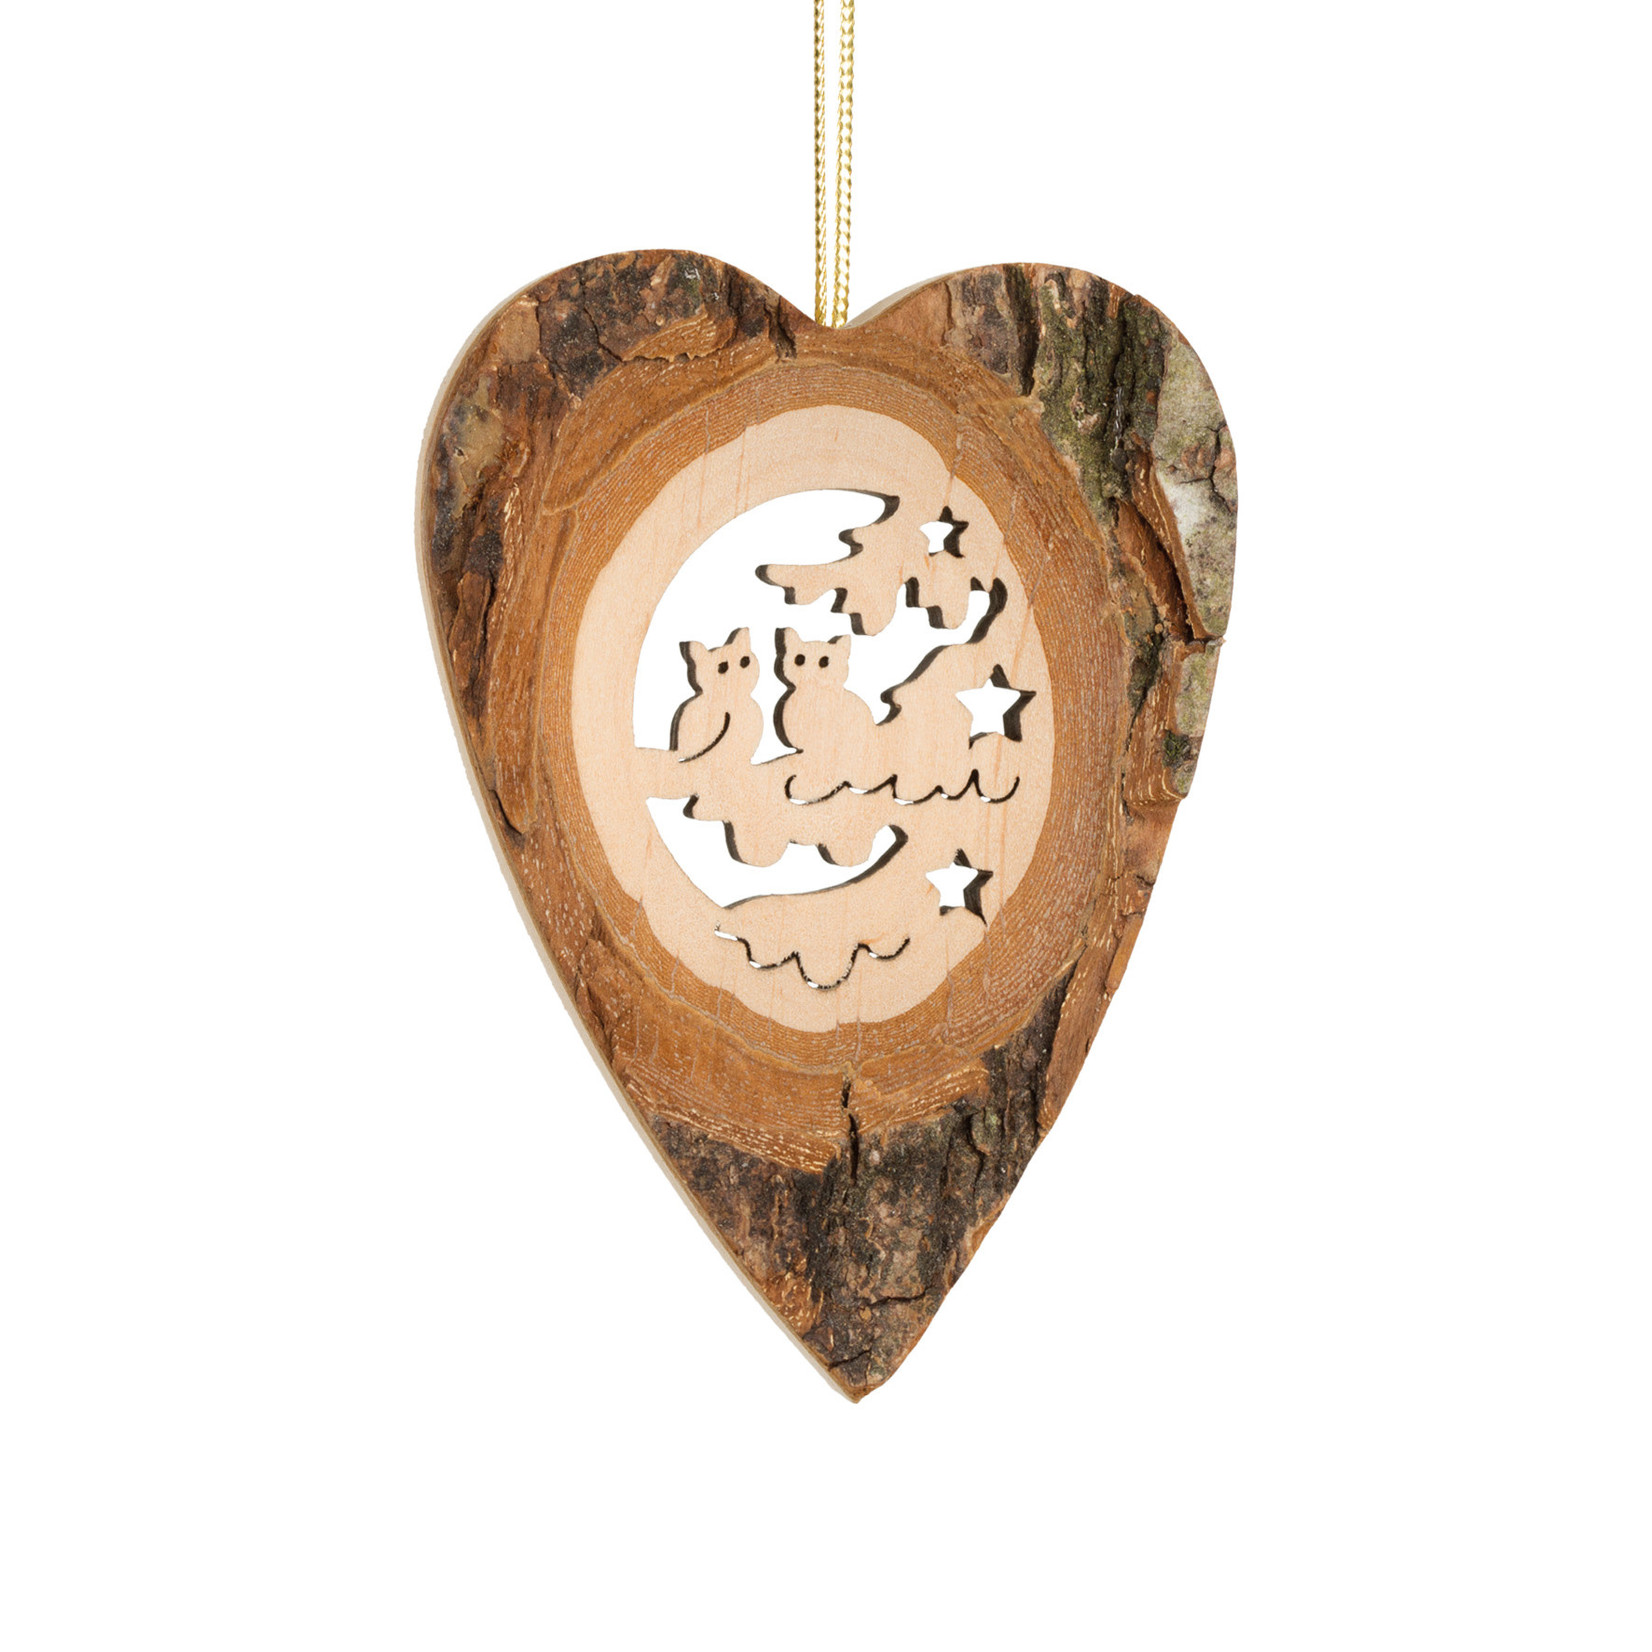 Waldfabrik Ornament Heart Bark - Owls in Tree